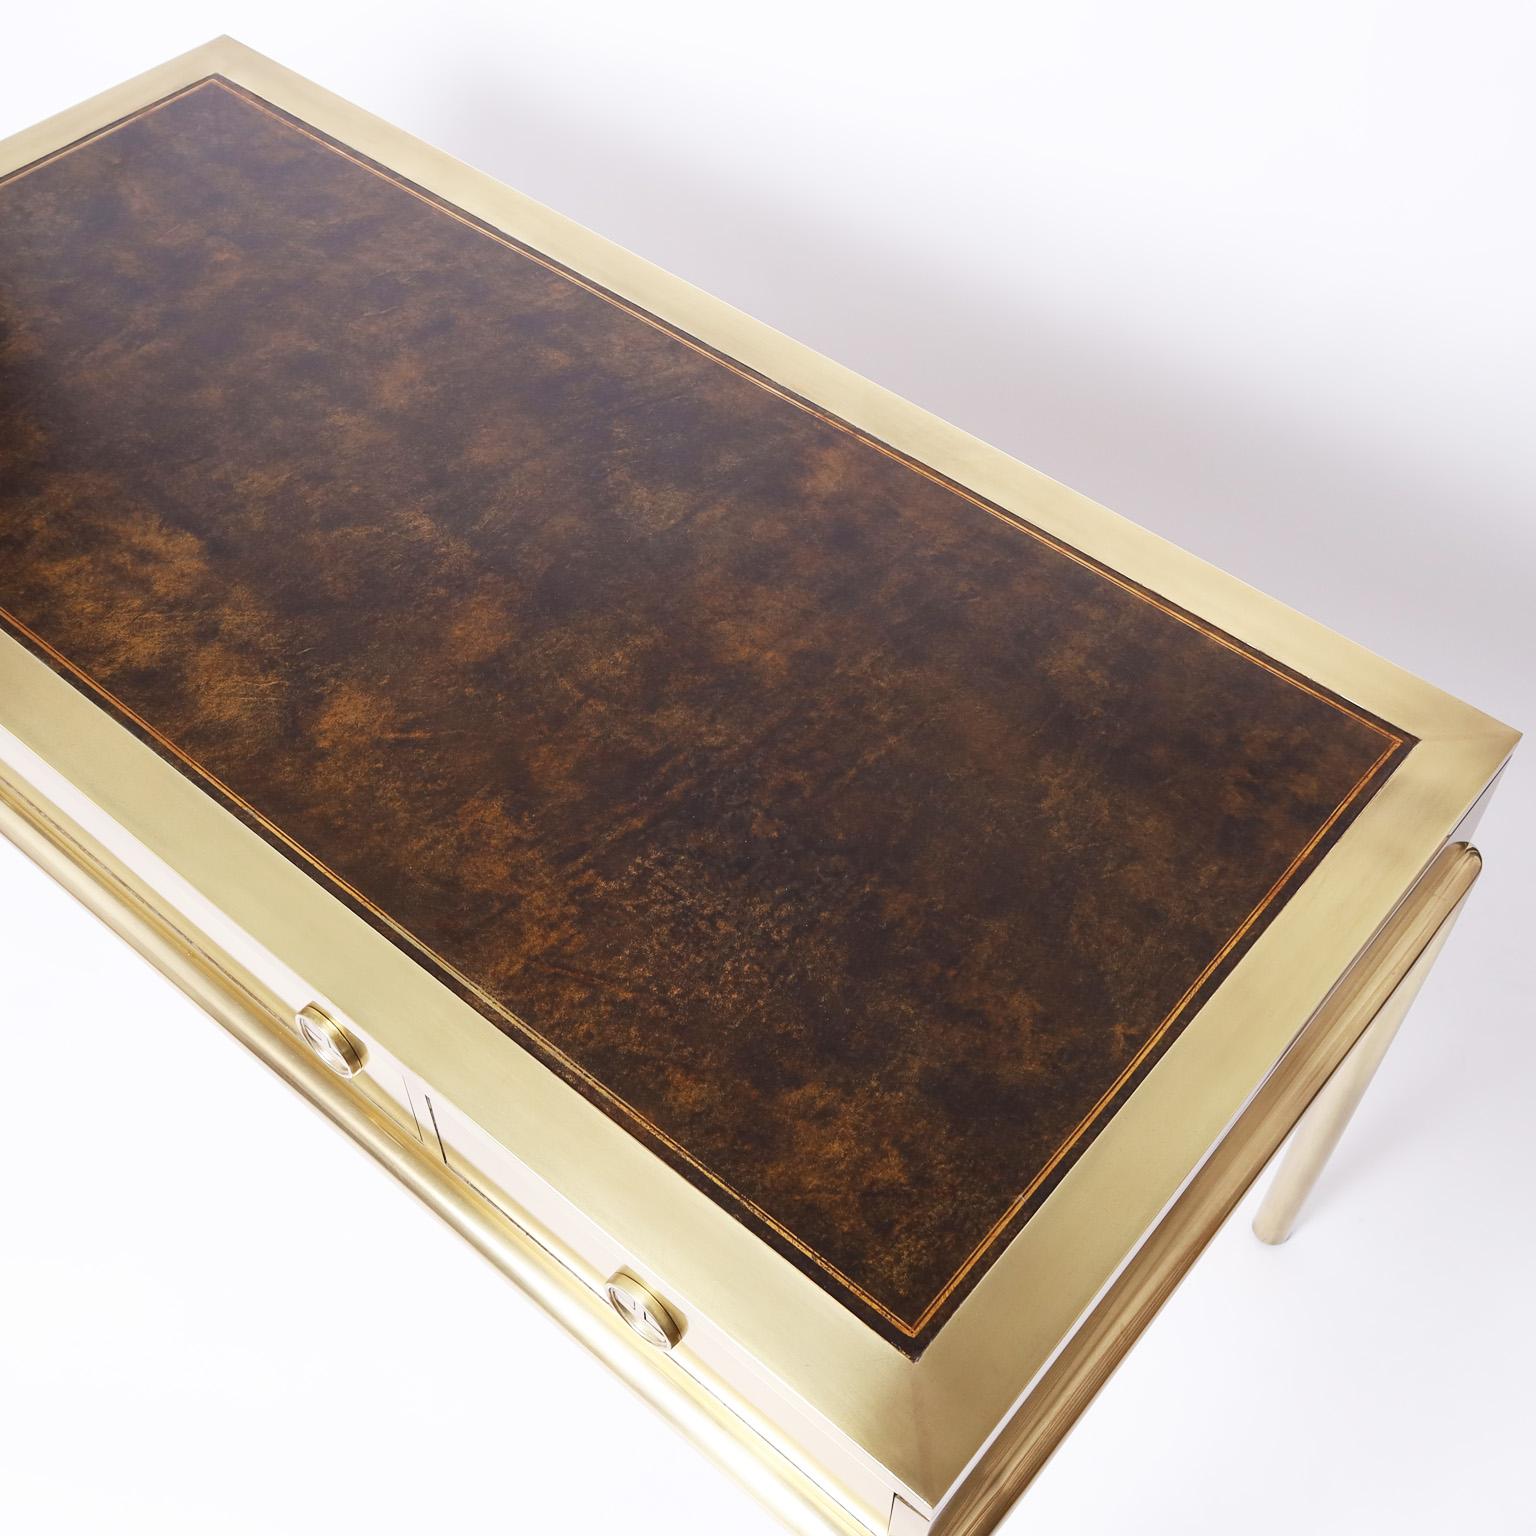 Polished Brass Leather Top Desk by Mastercraft